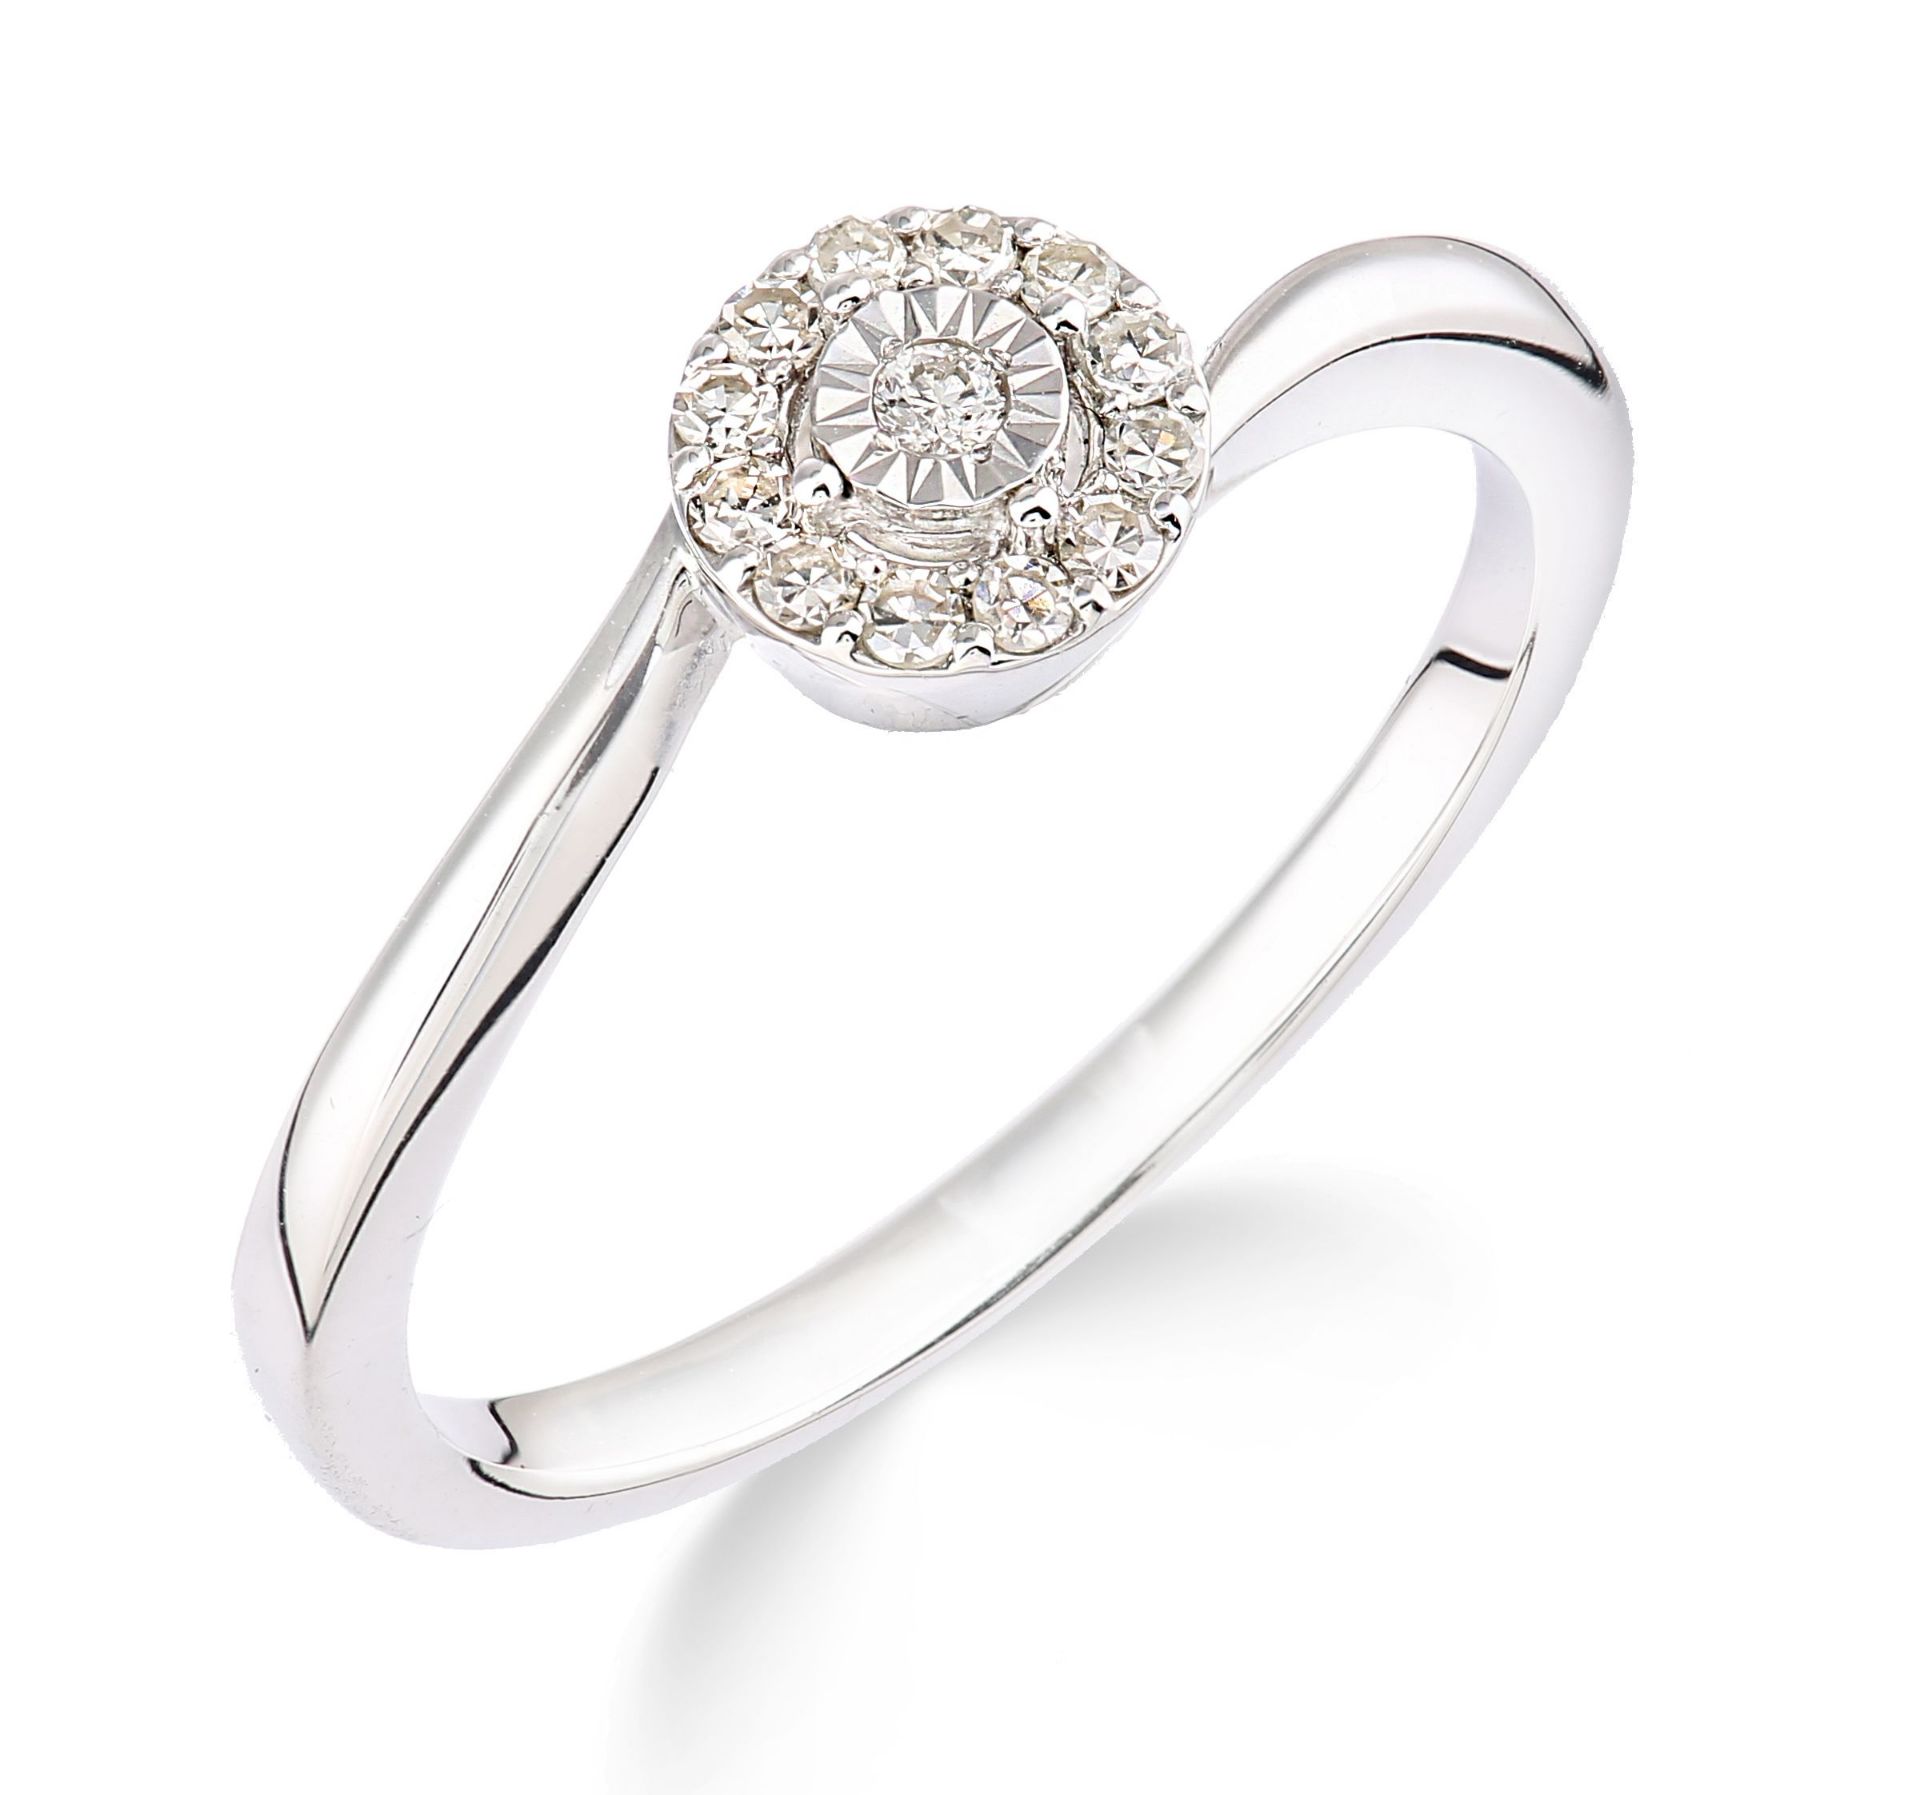 White Gold Diamond Ring With Subtle Twist Size K RRP £550 (UR4362B)